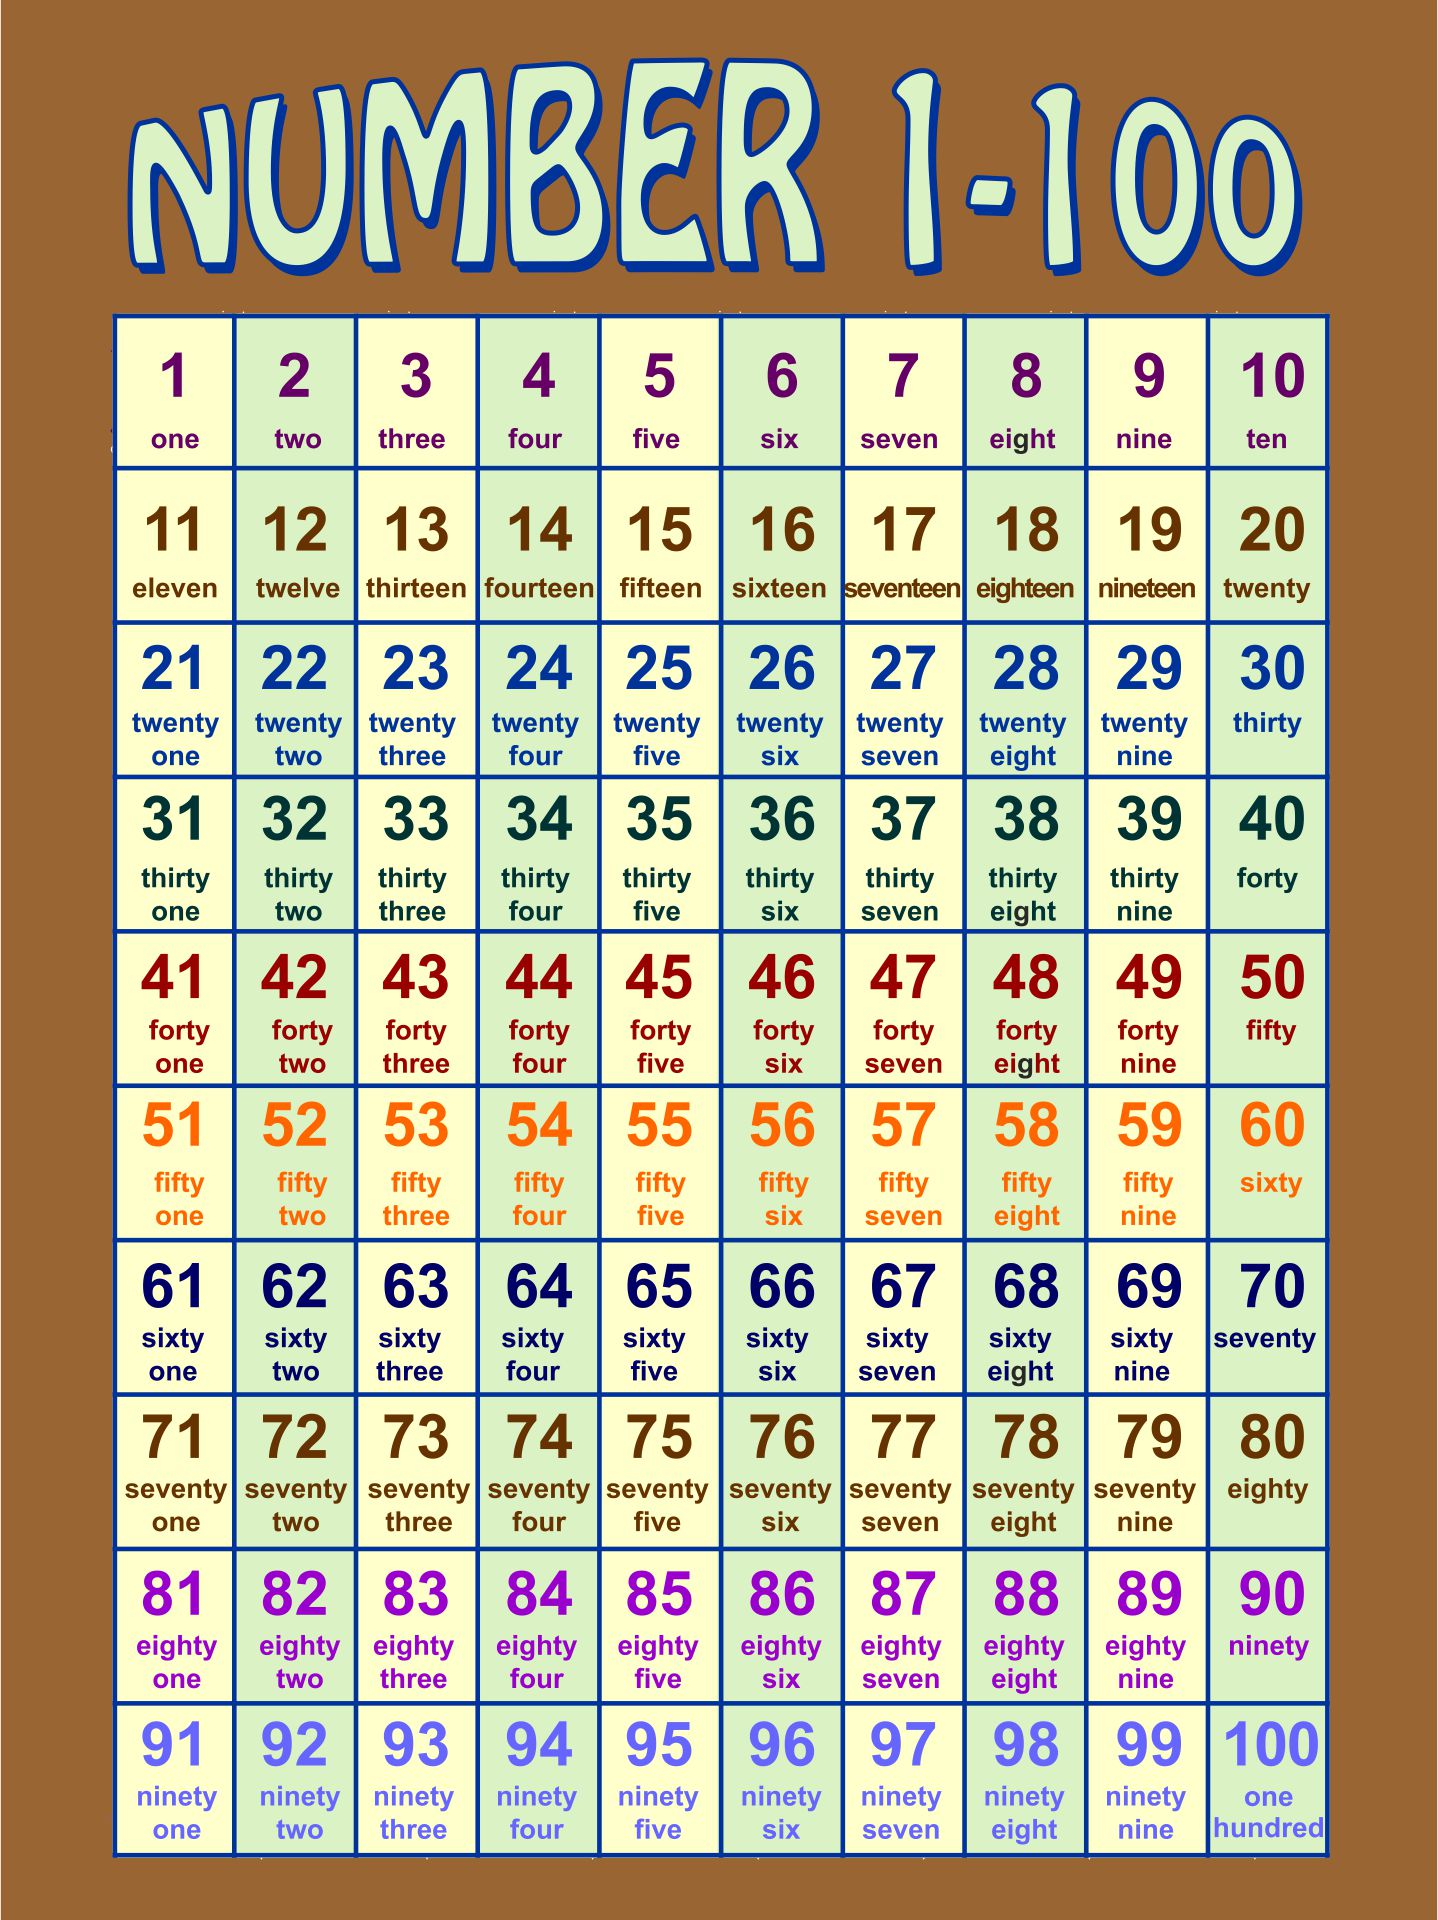 7-best-images-of-number-cards-1-100-printable-number-cards-1-20-number-flashcards-1-100